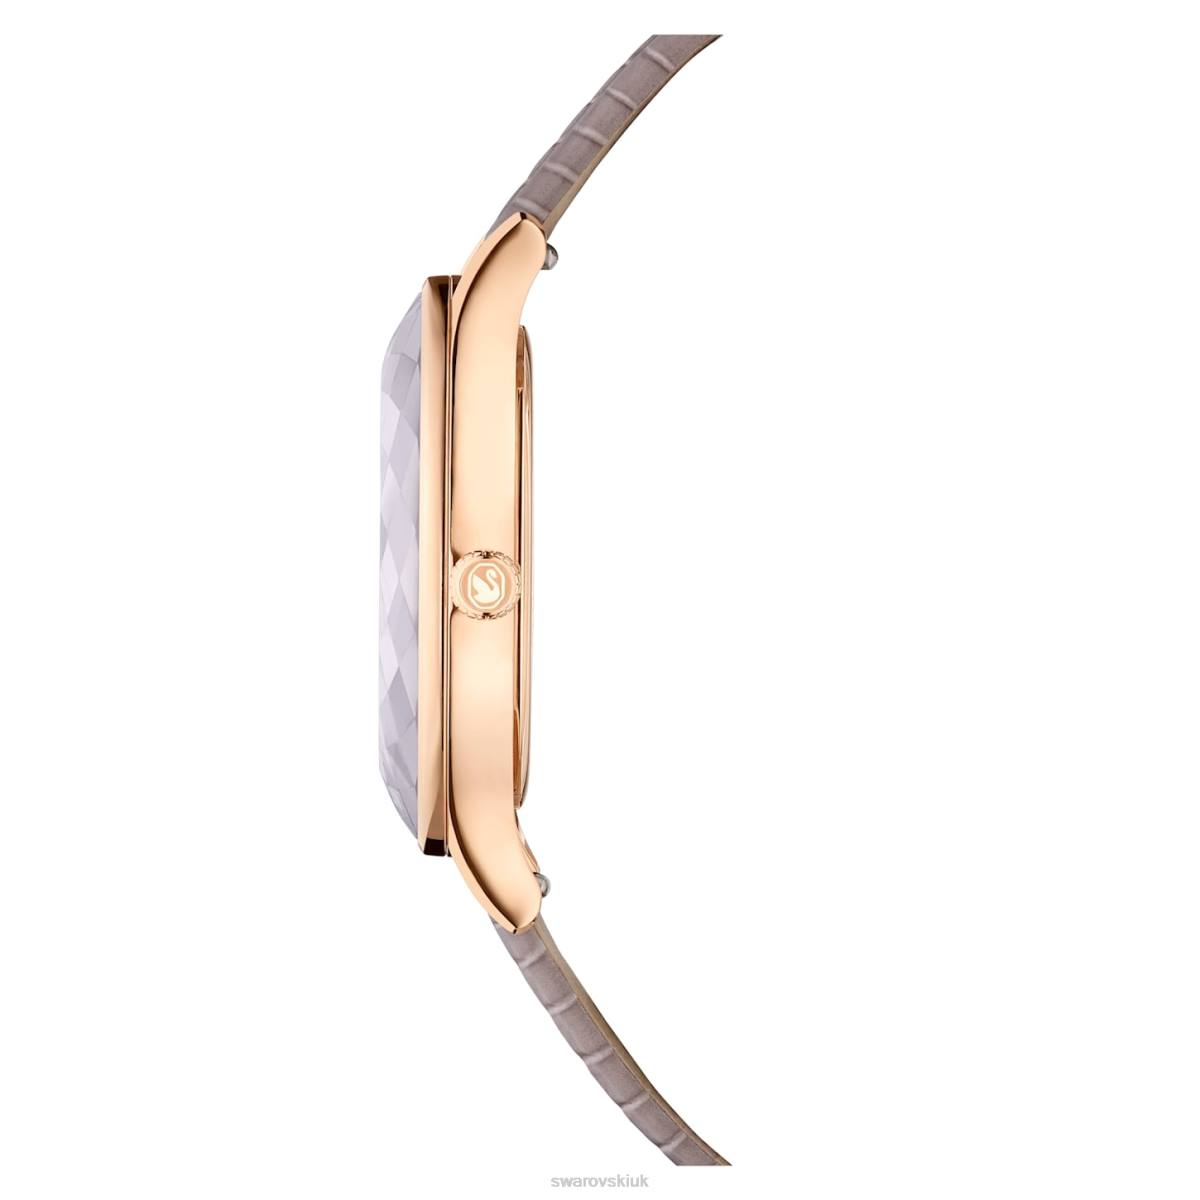 Accessories Swarovski Octea Nova watch Swiss Made, Leather strap, Beige, Rose gold-tone finish 48JX1184